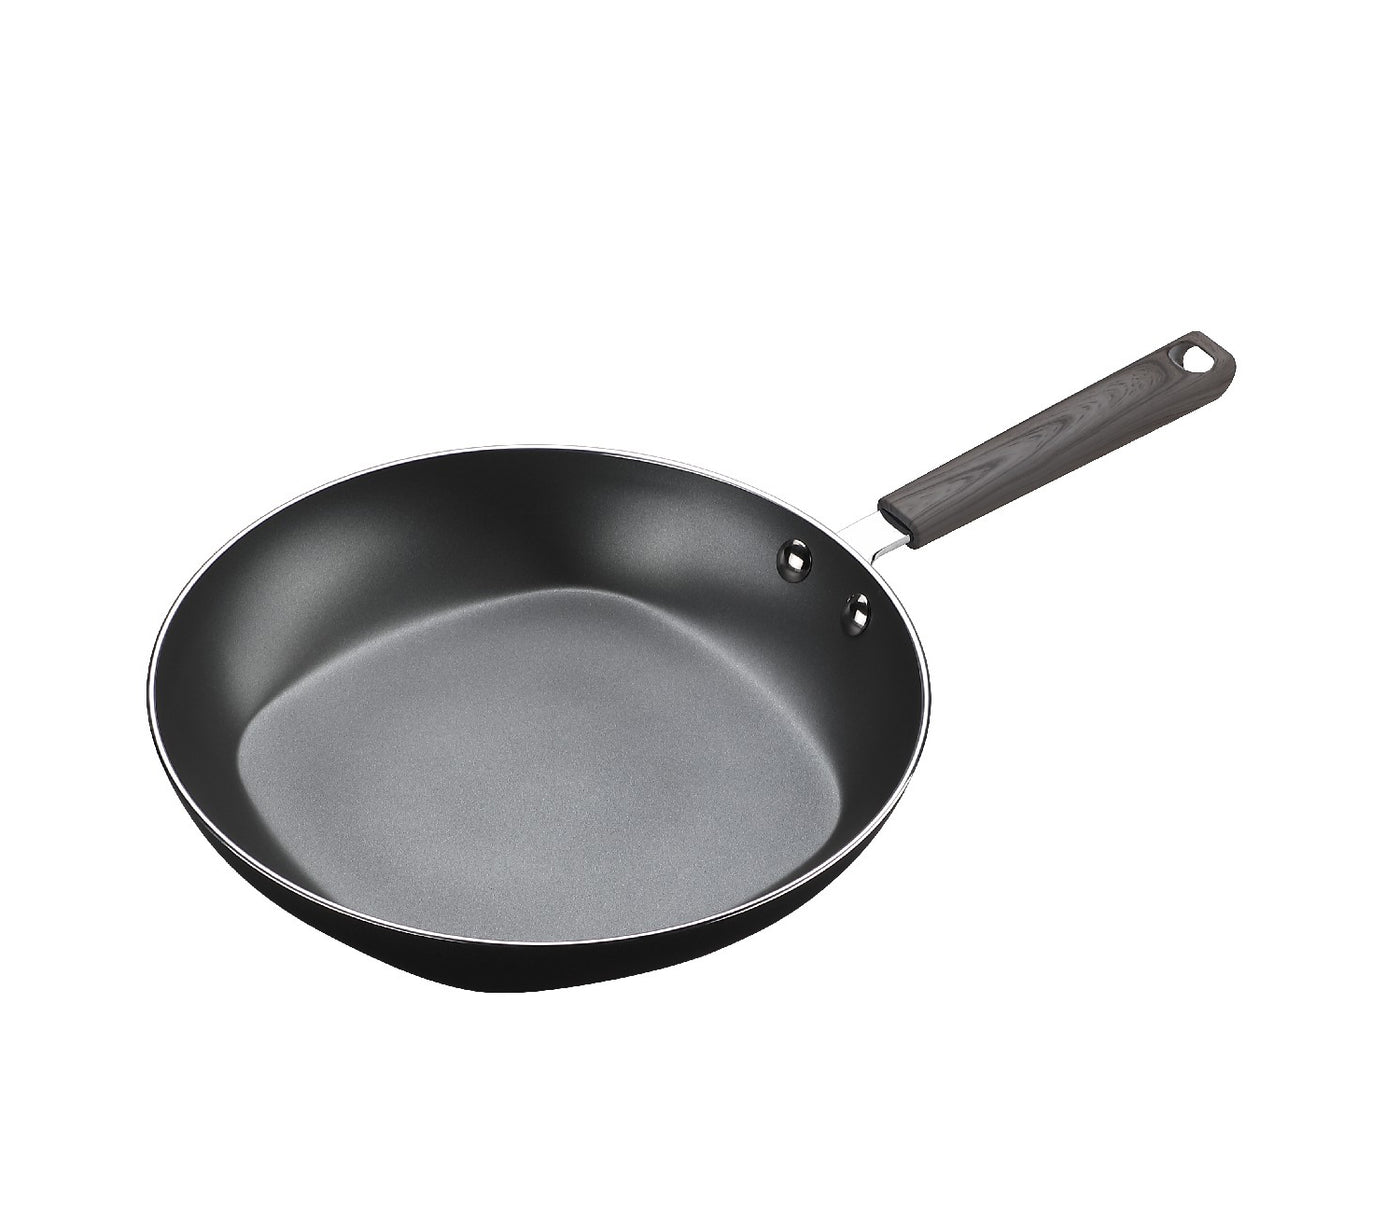 11 inch Easy Pan